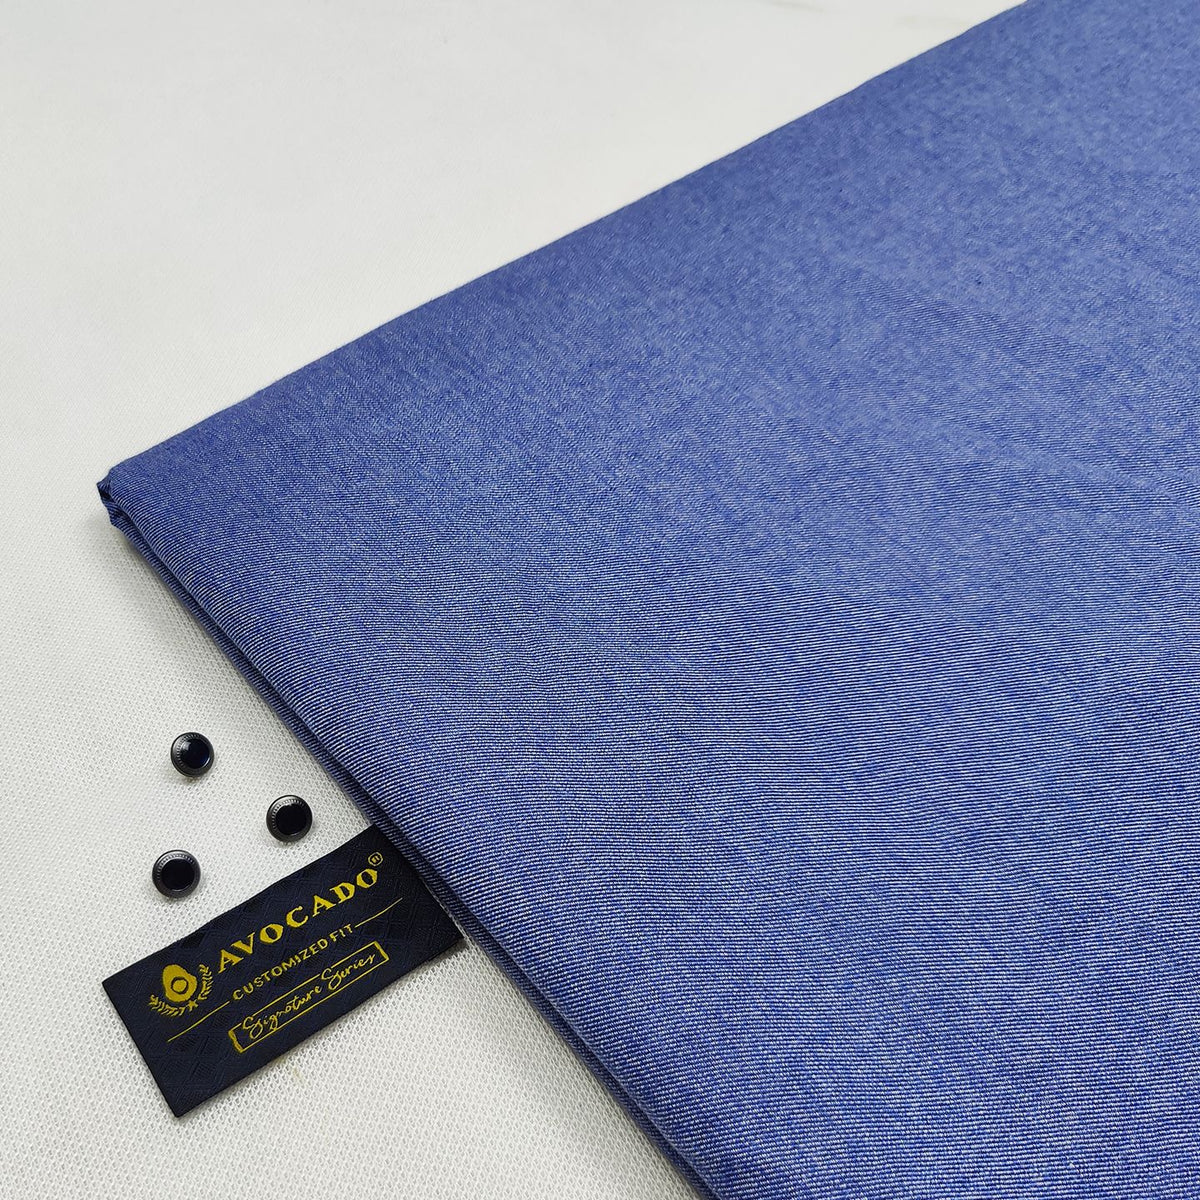 Royal Blue Mix Texture kameez shalwar Fabric with Buttons & label